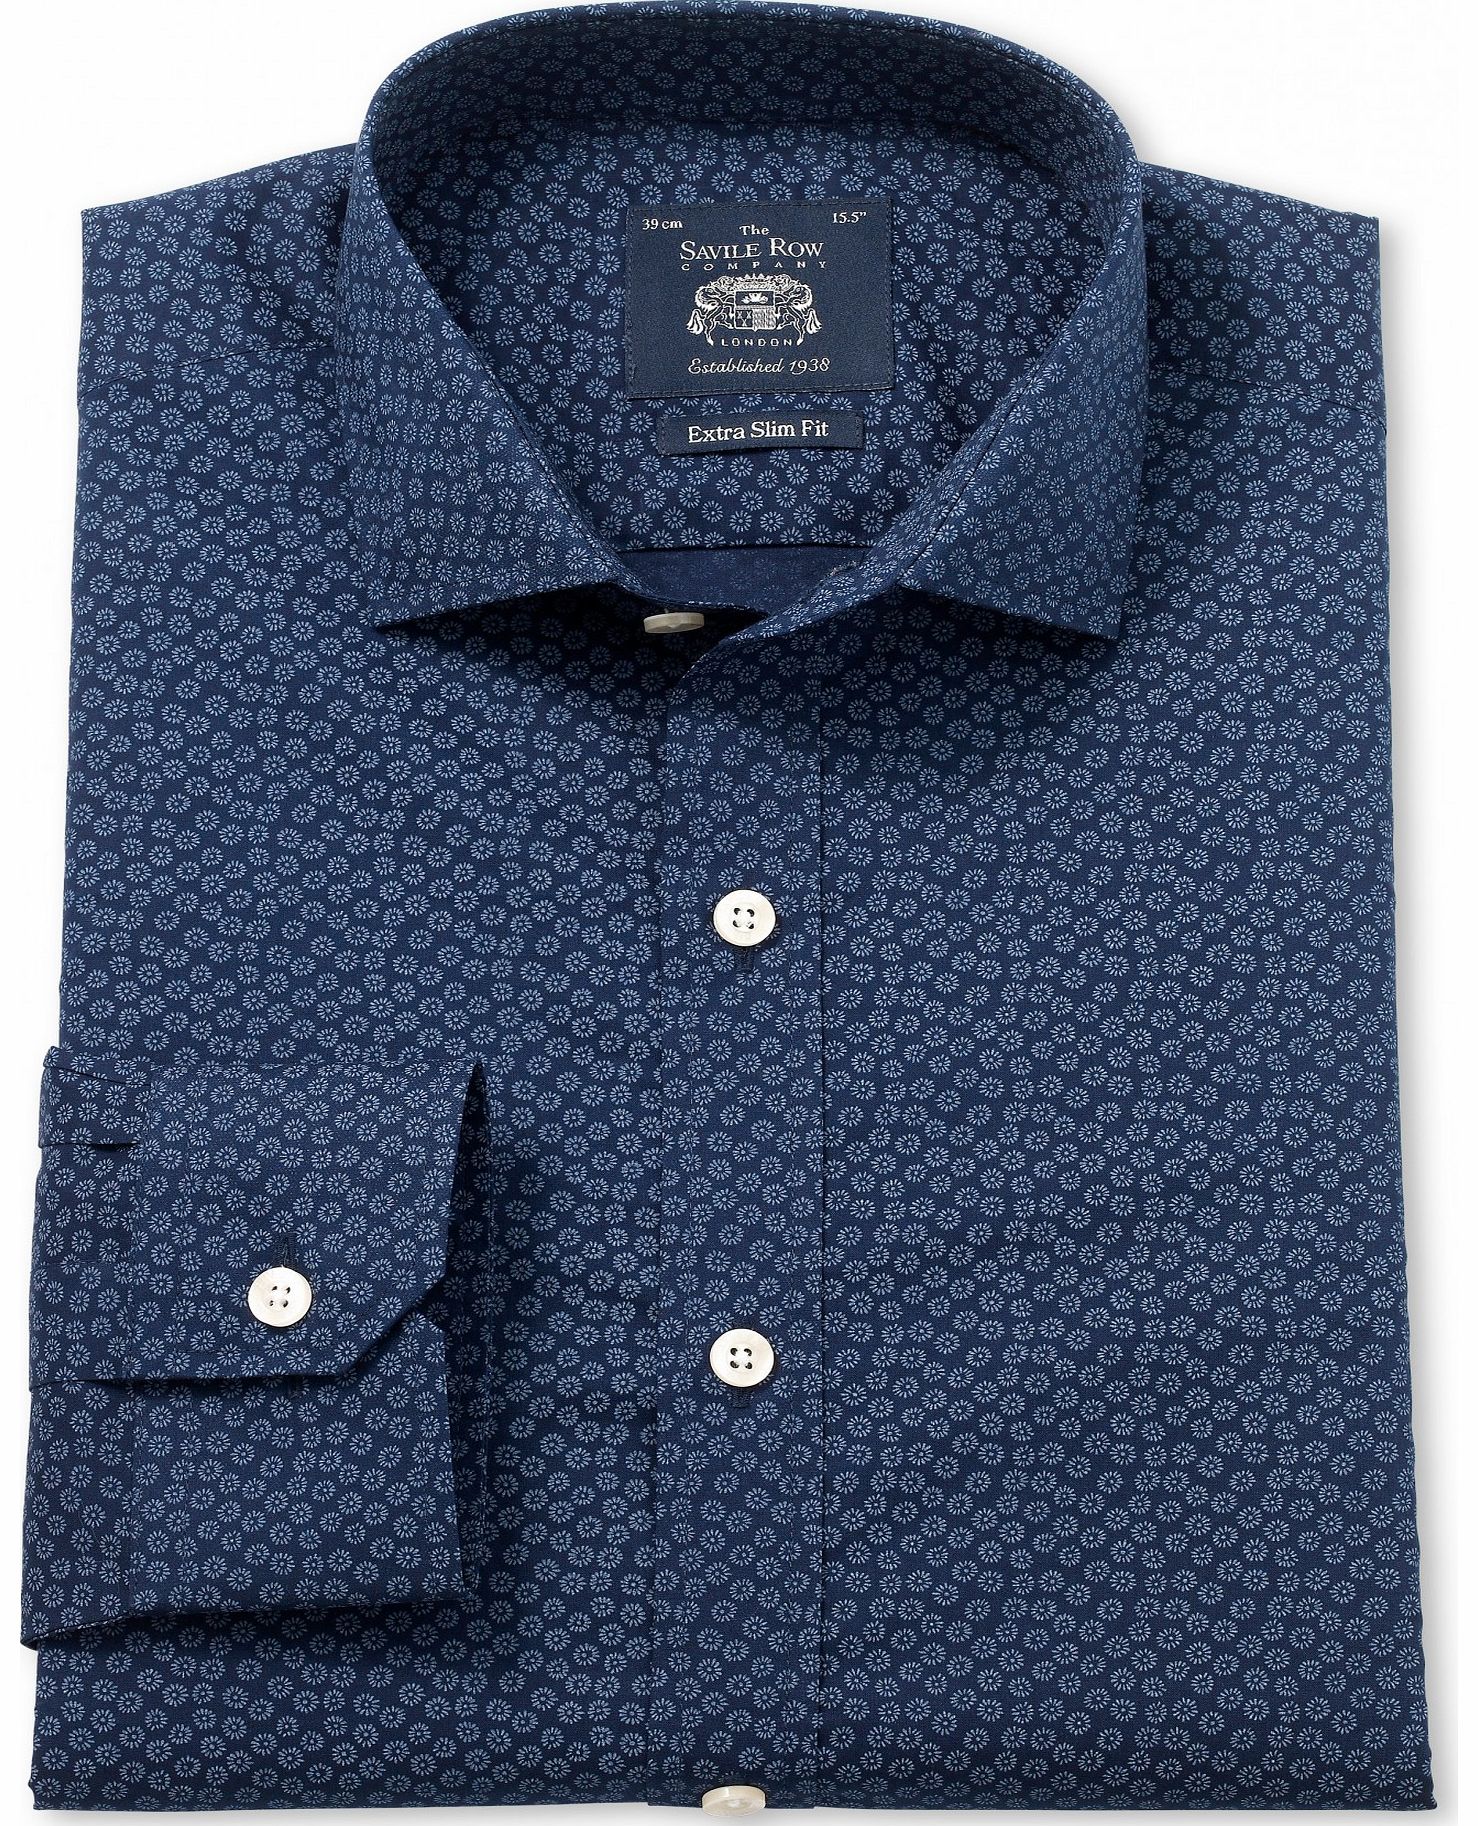 Savile Row Company Navy Blue Printed Extra Slim Fit Shirt 14 1/2``